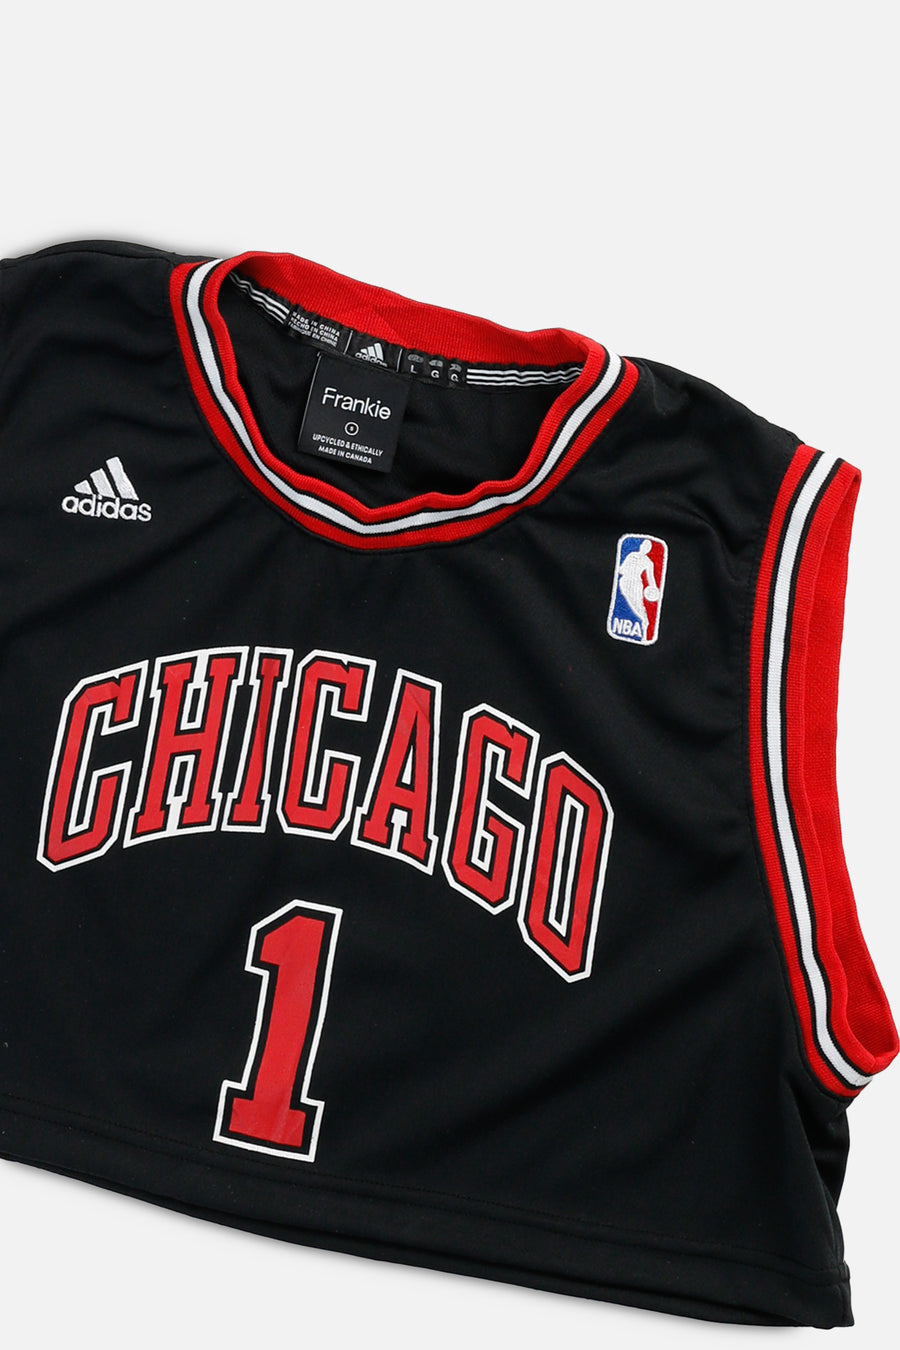 Rework Chicago Bulls NBA Crop Jersey - S